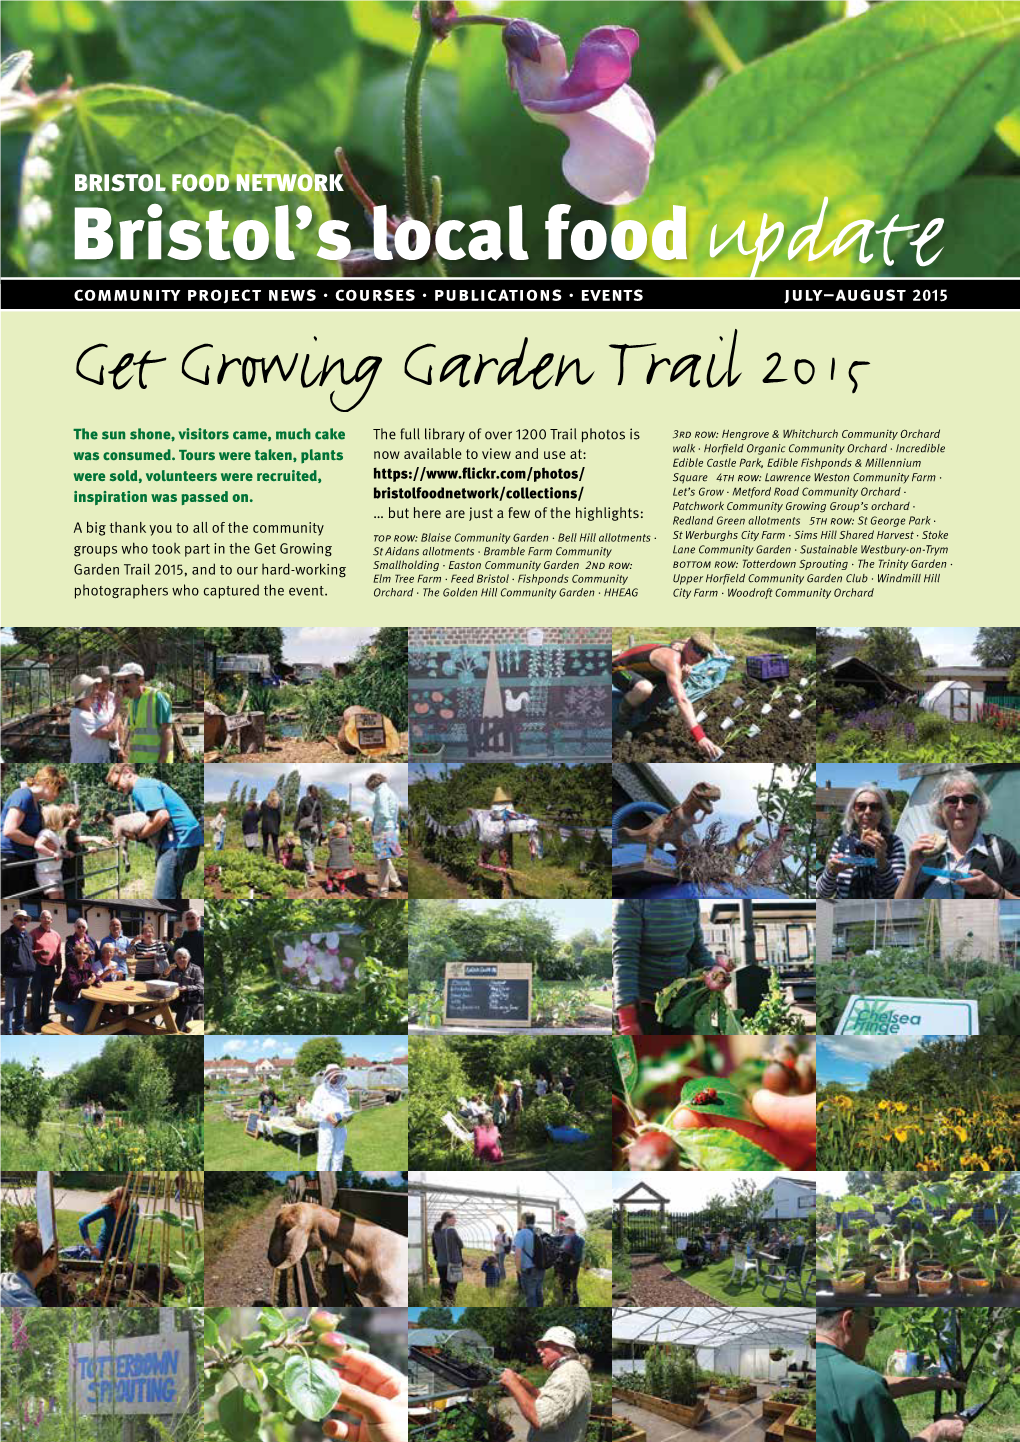 Get Growing Garden Trail 2015